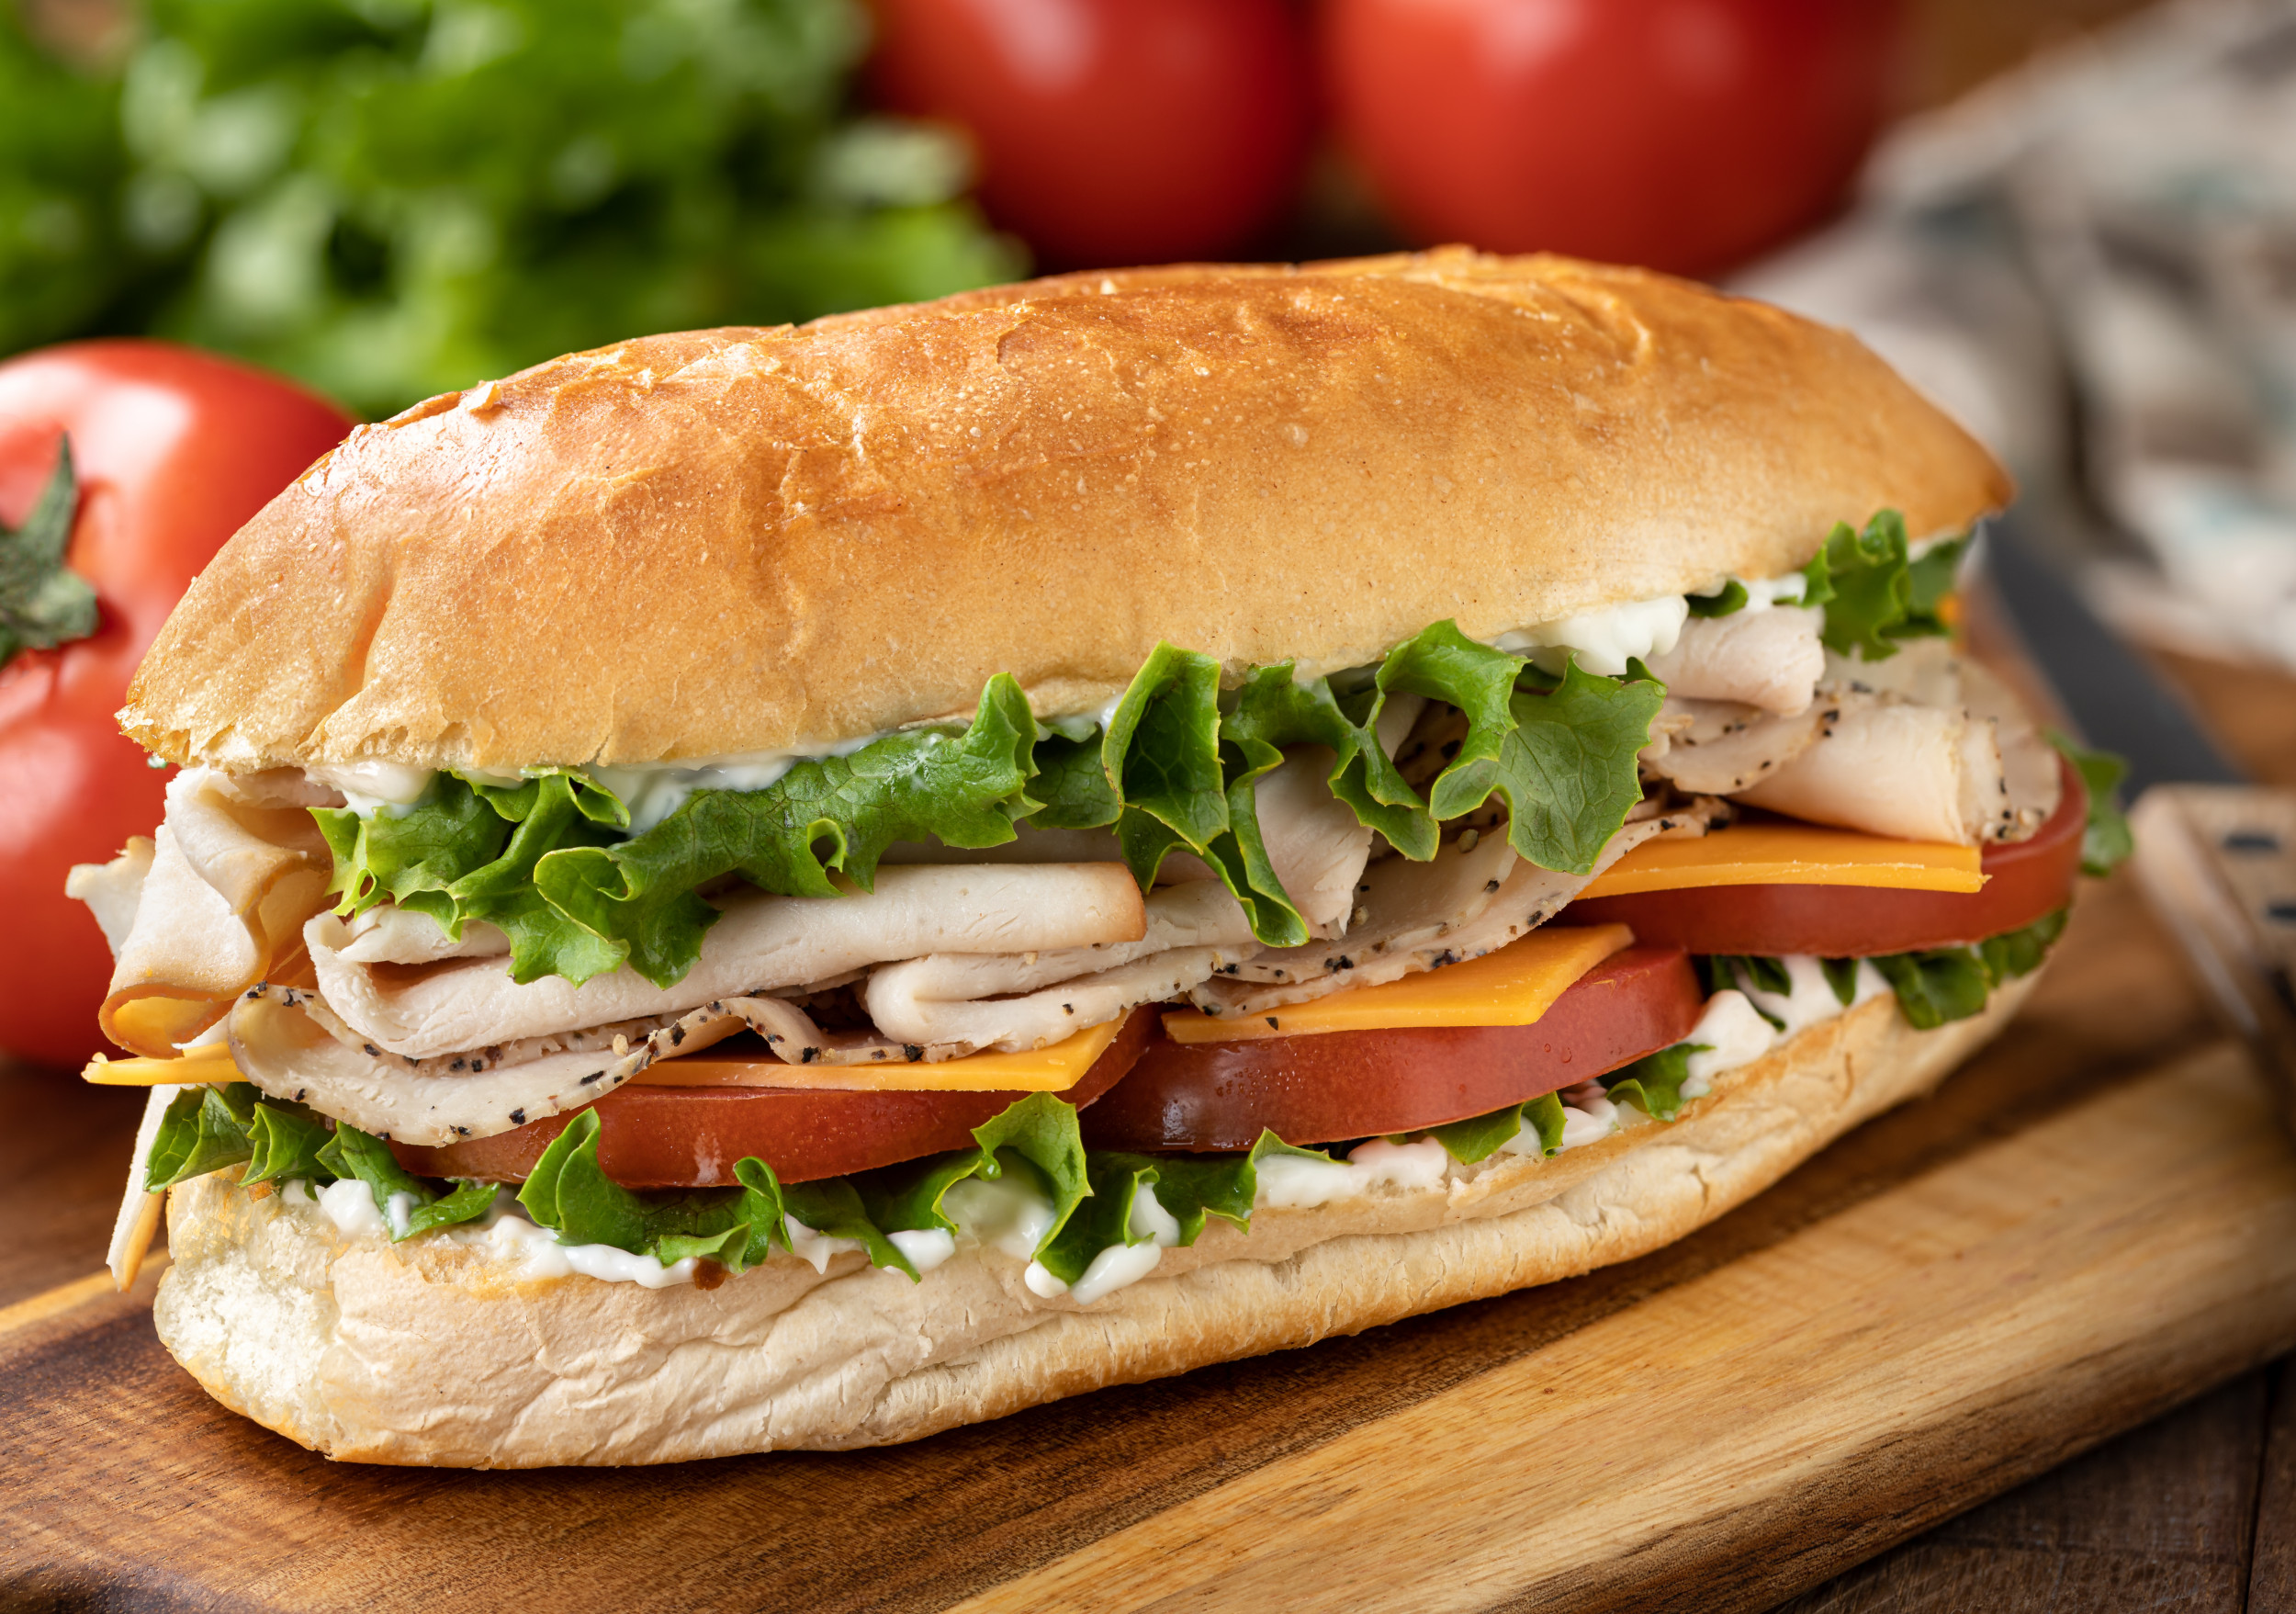 Subway's New Sandwiches A 'Safety Hazard,' Franchise Association